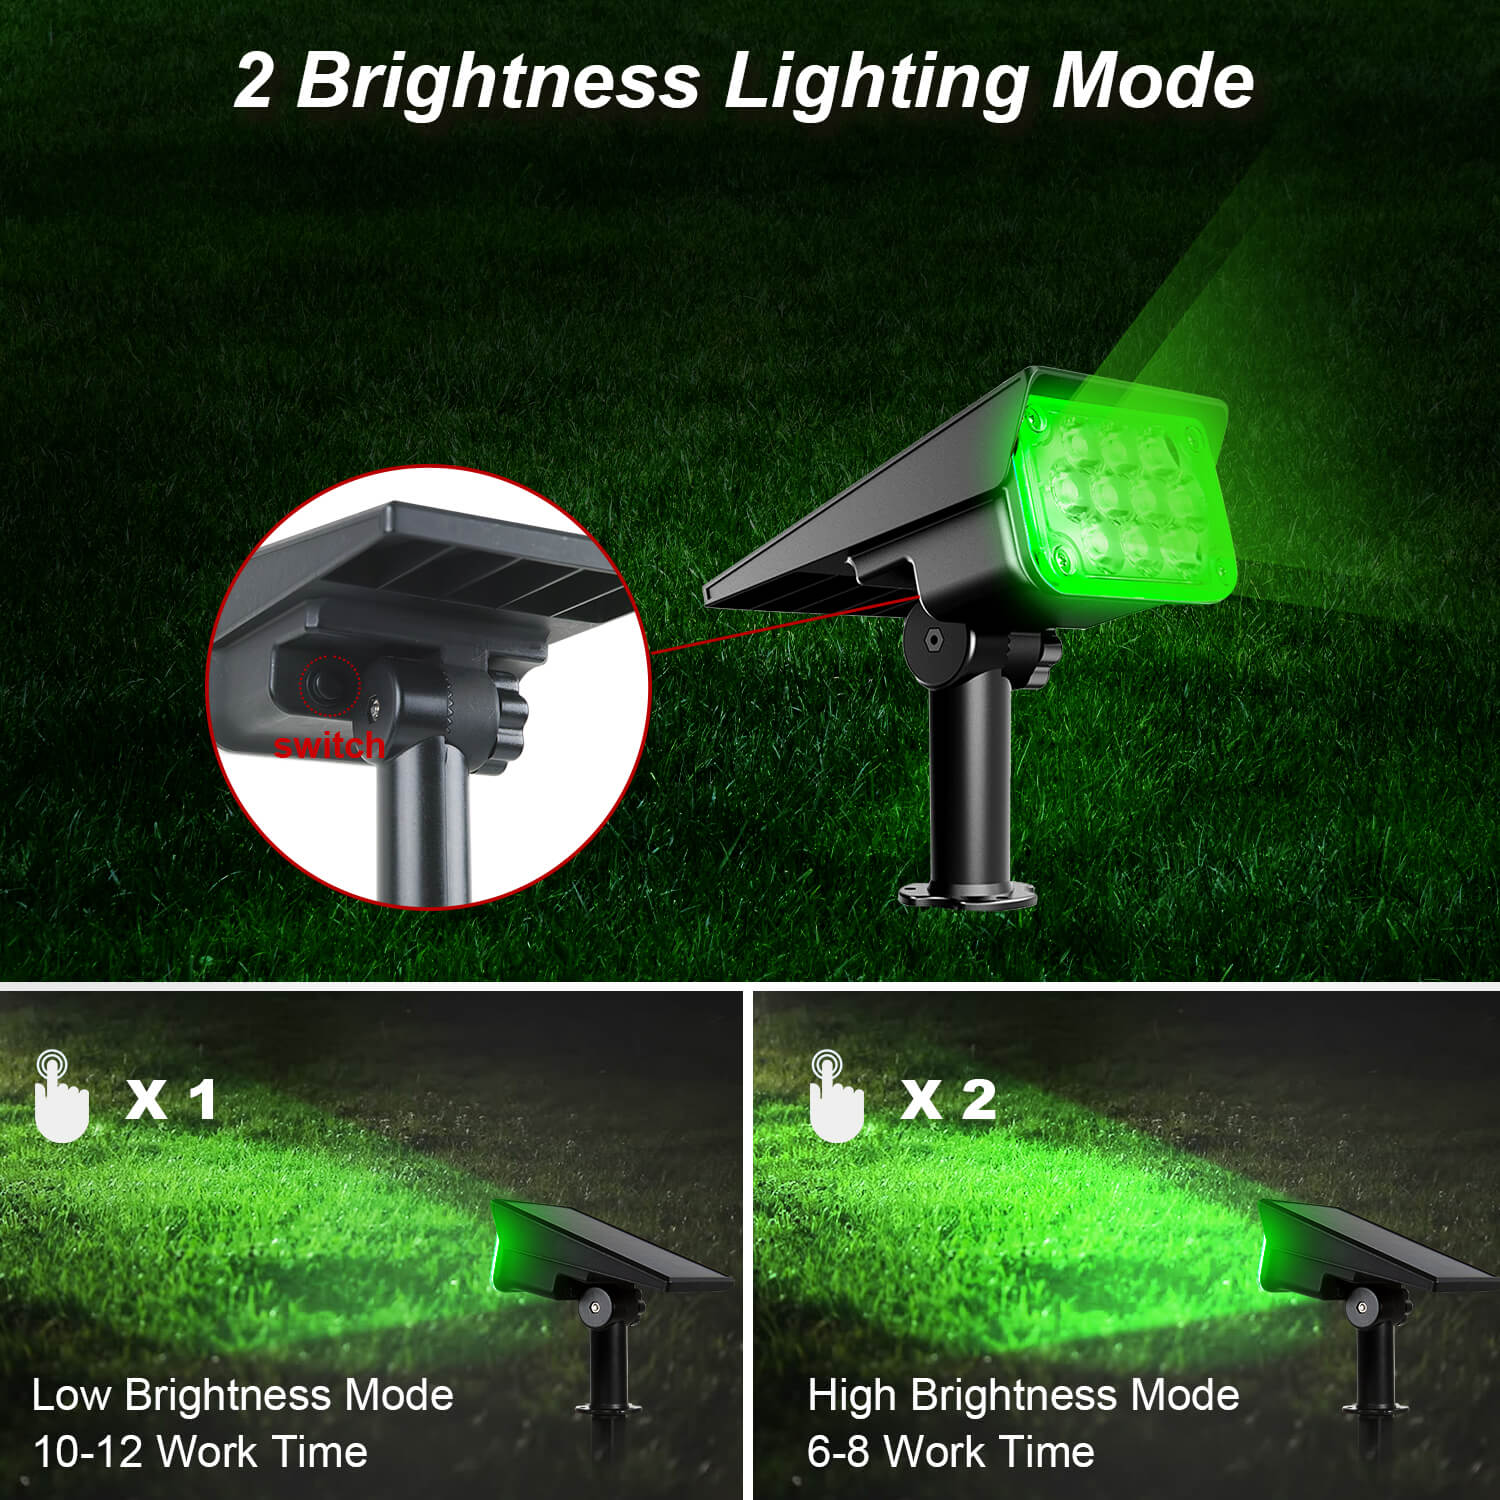 Green light brightness mode display